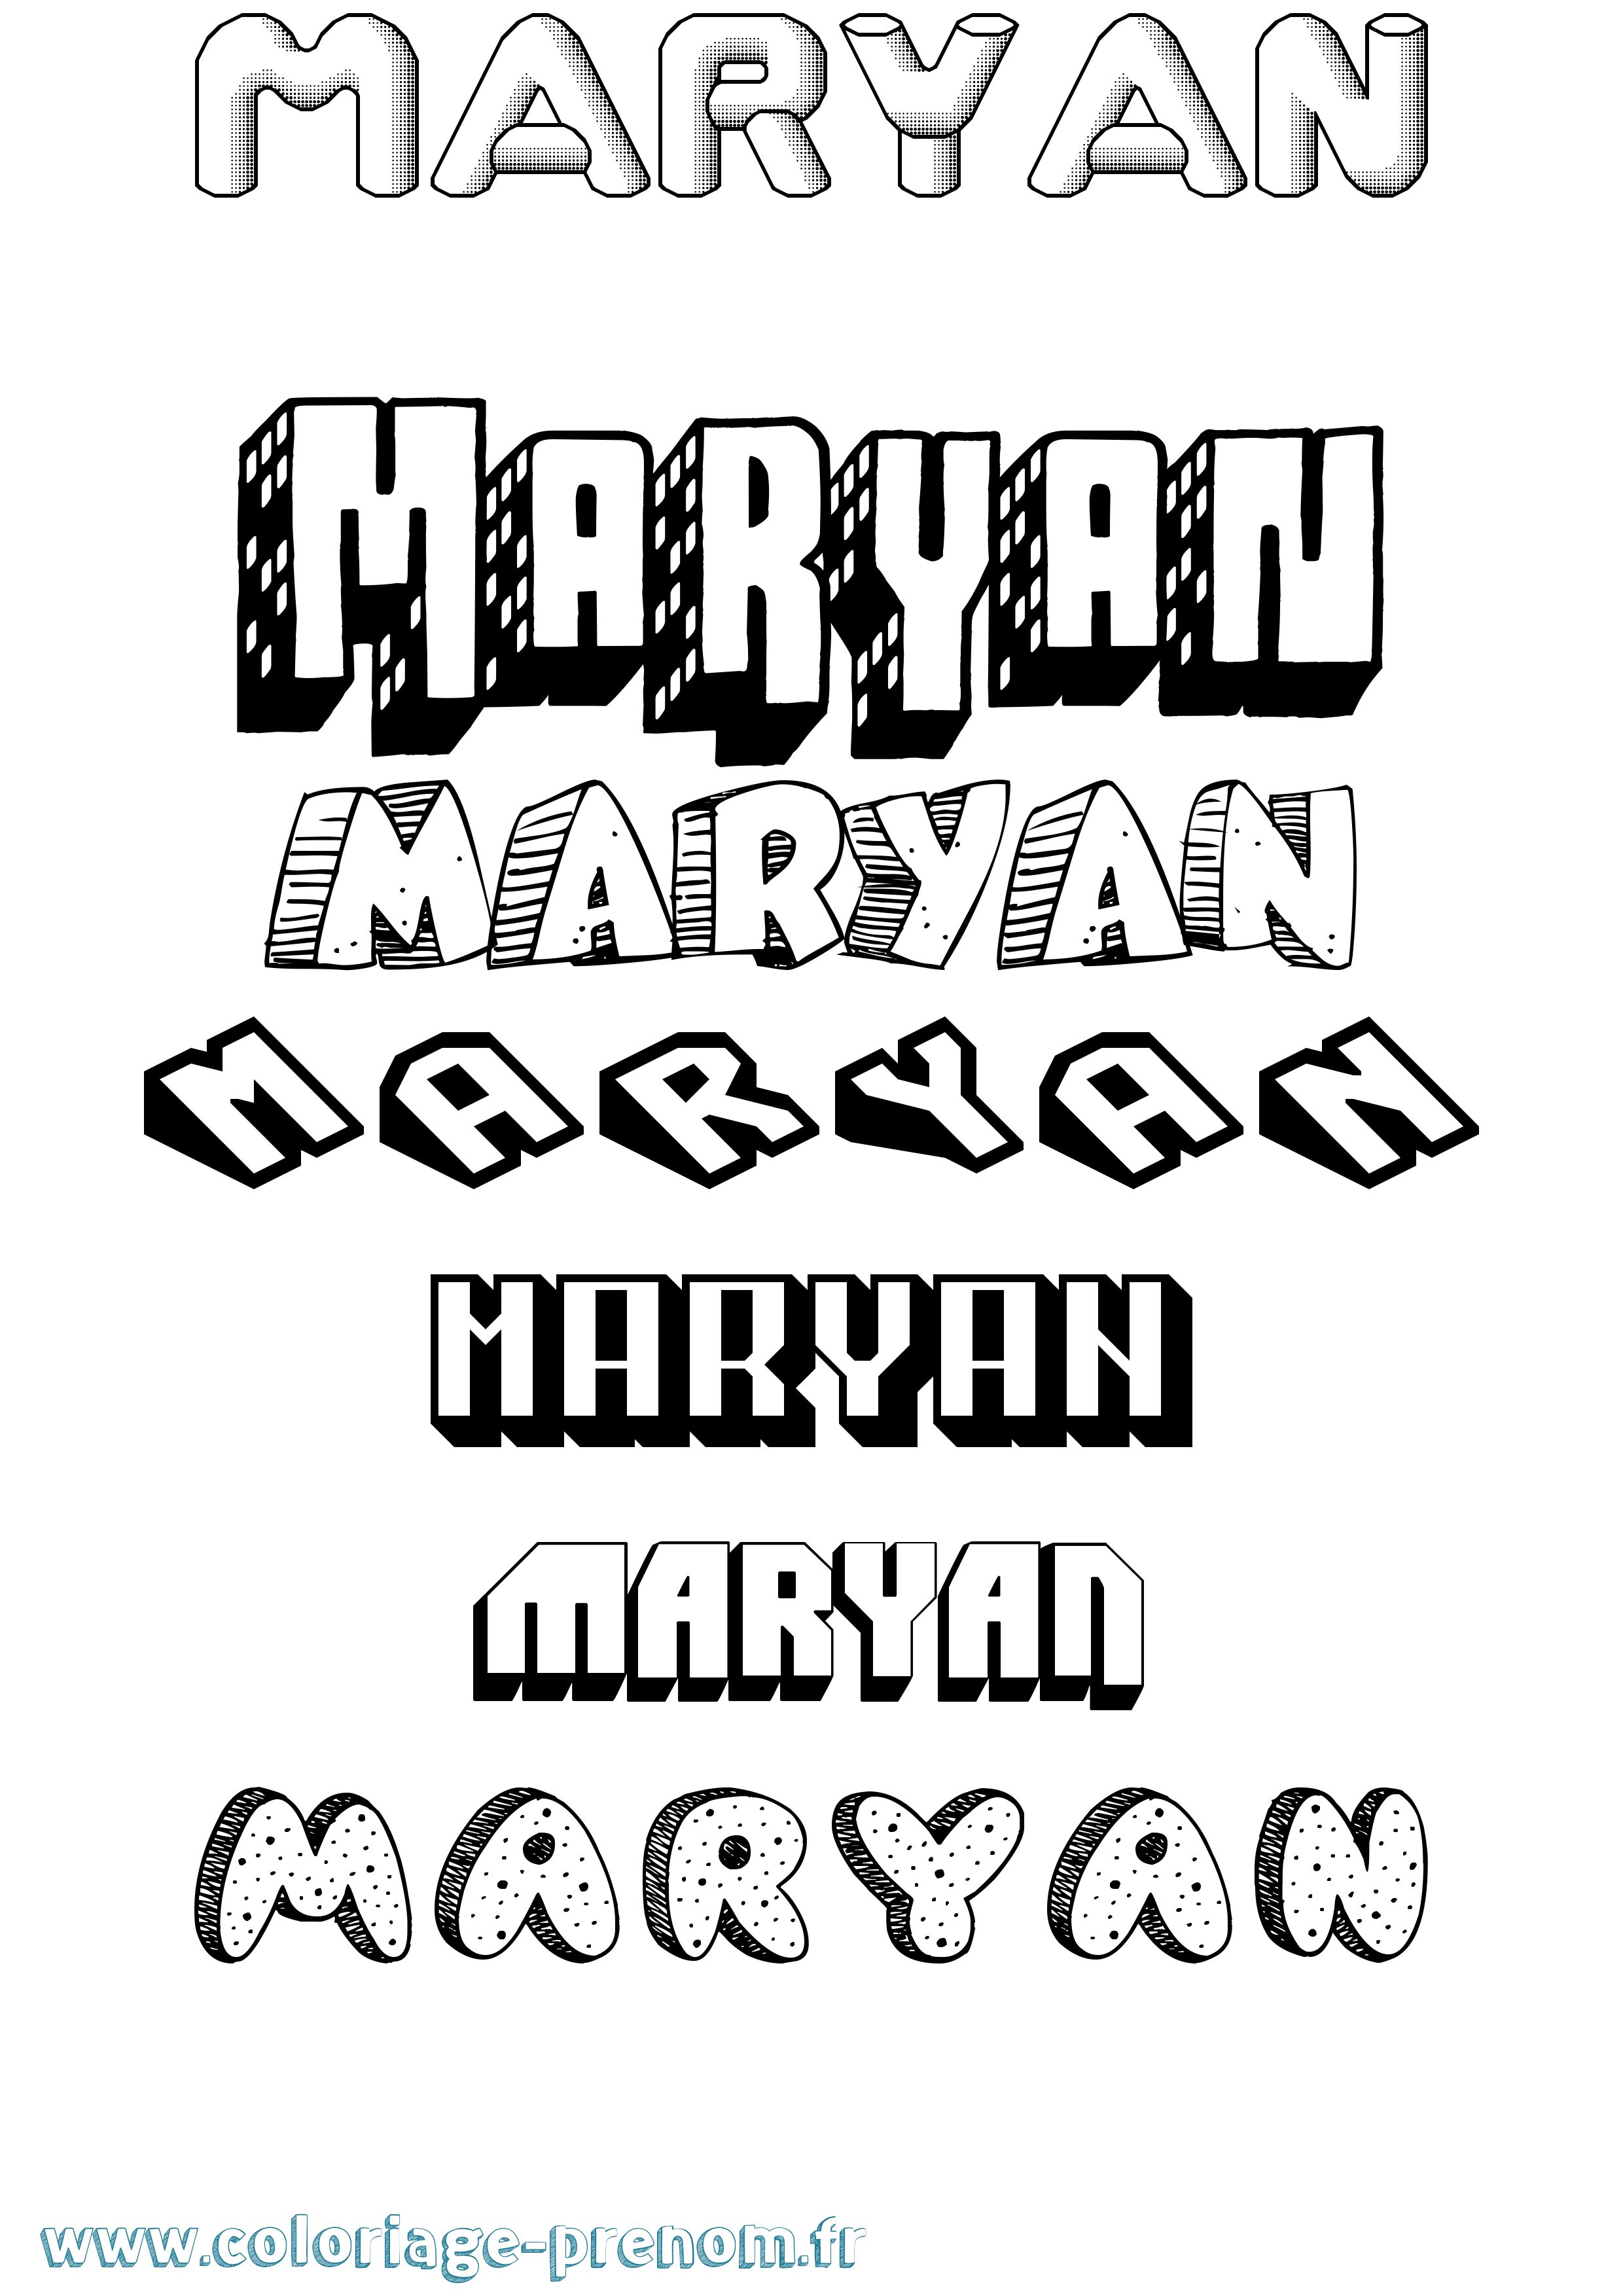 Coloriage prénom Maryan Effet 3D